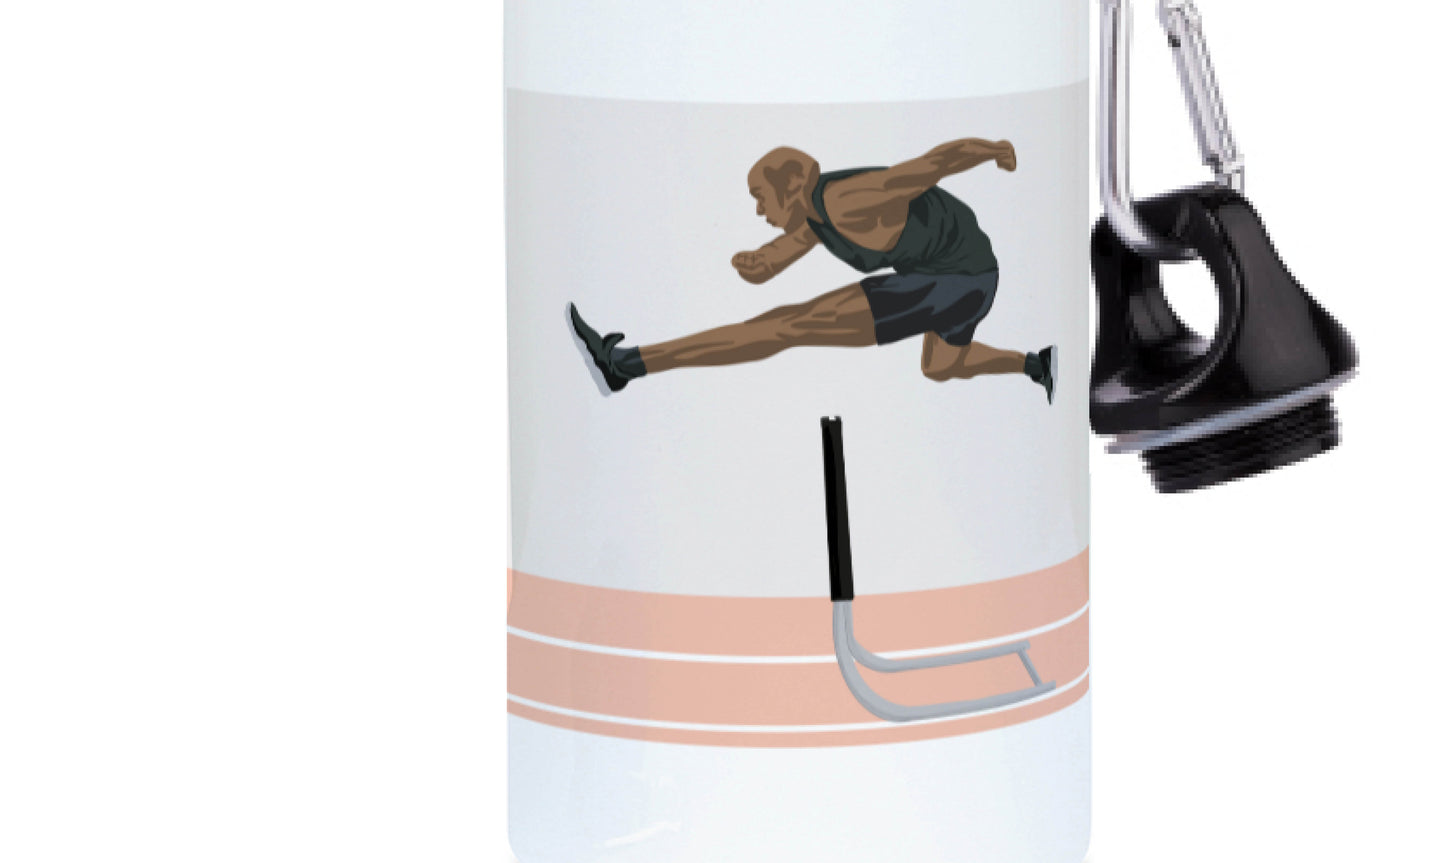 Aluminum athletics bottle "Men's hurdle jump" - Customizable